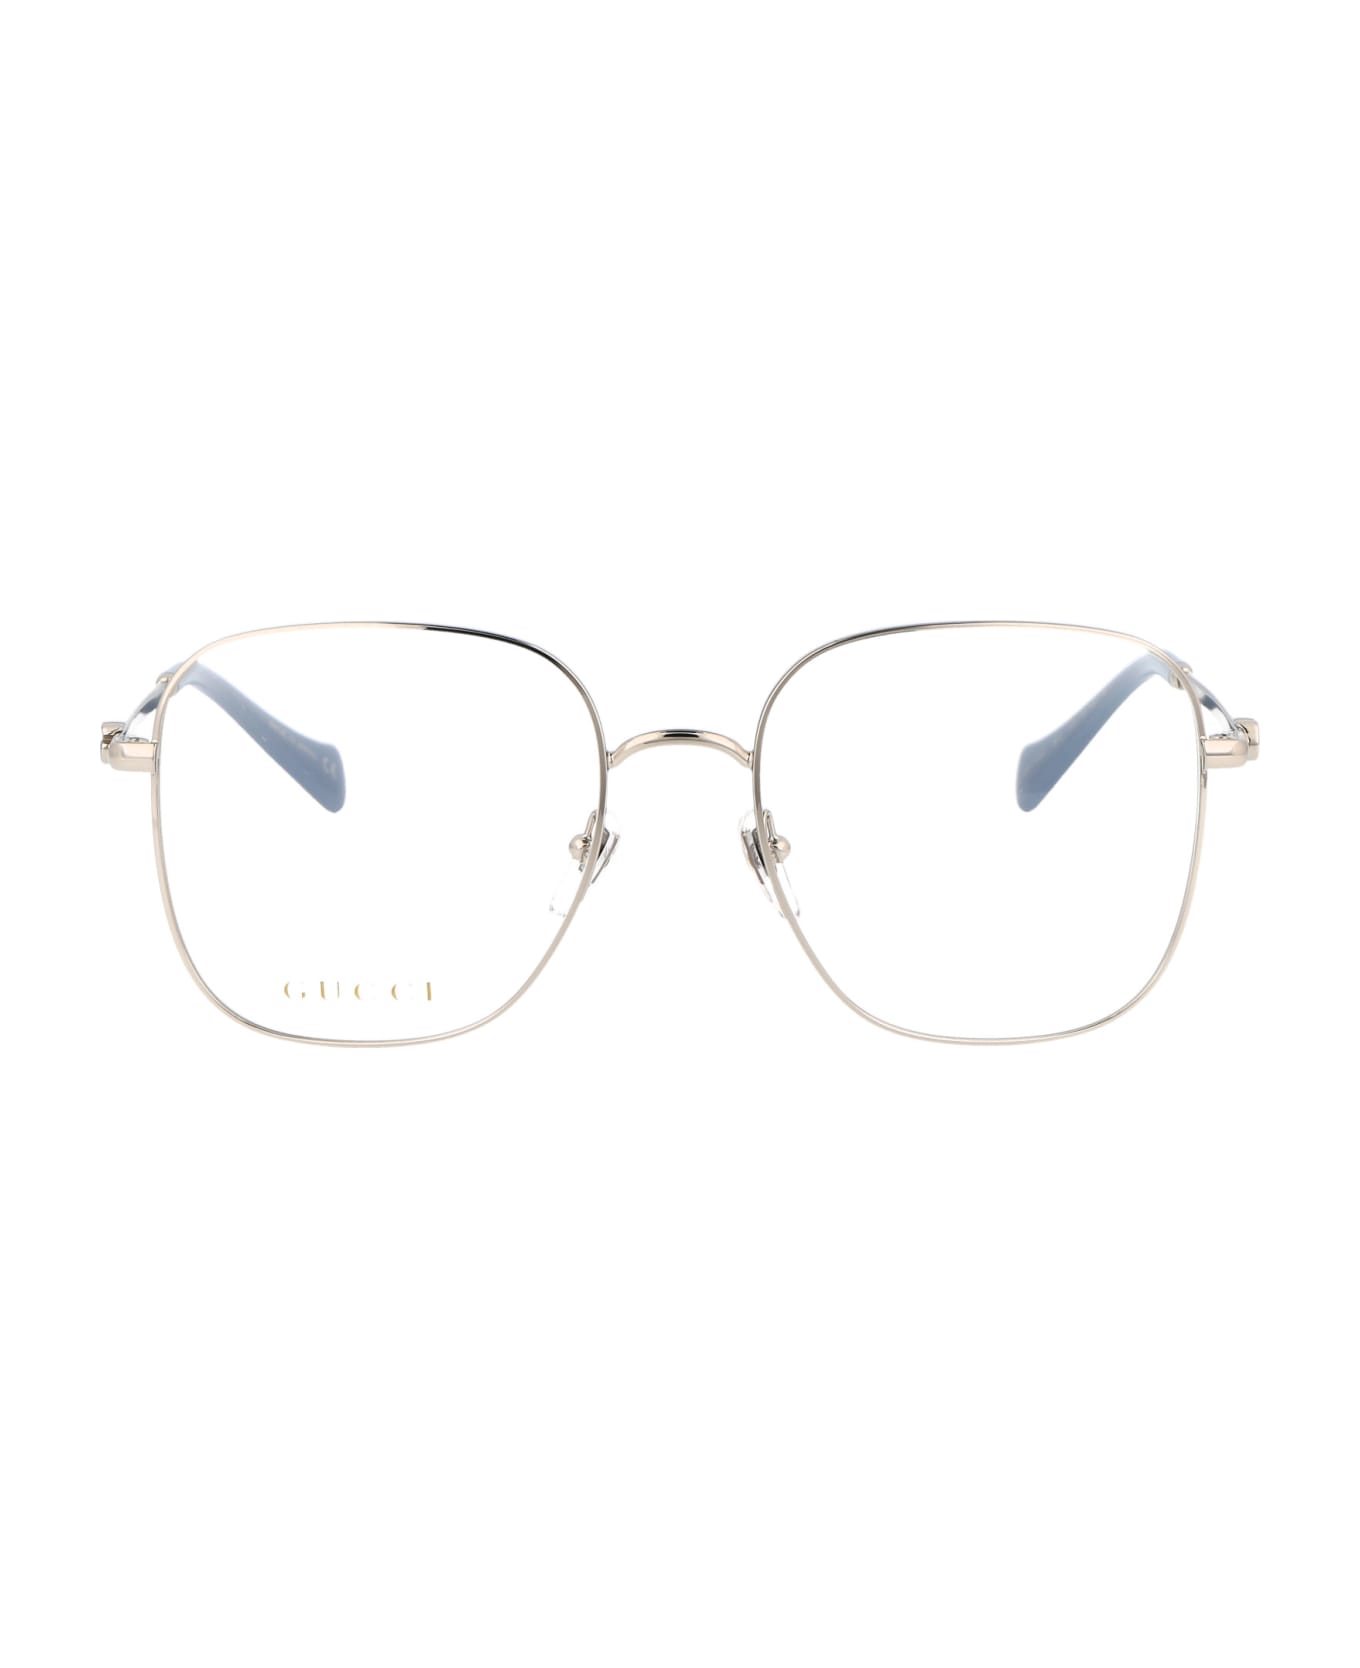 Gucci Eyewear Gg1144o Glasses - 002 SILVER SILVER TRANSPARENT